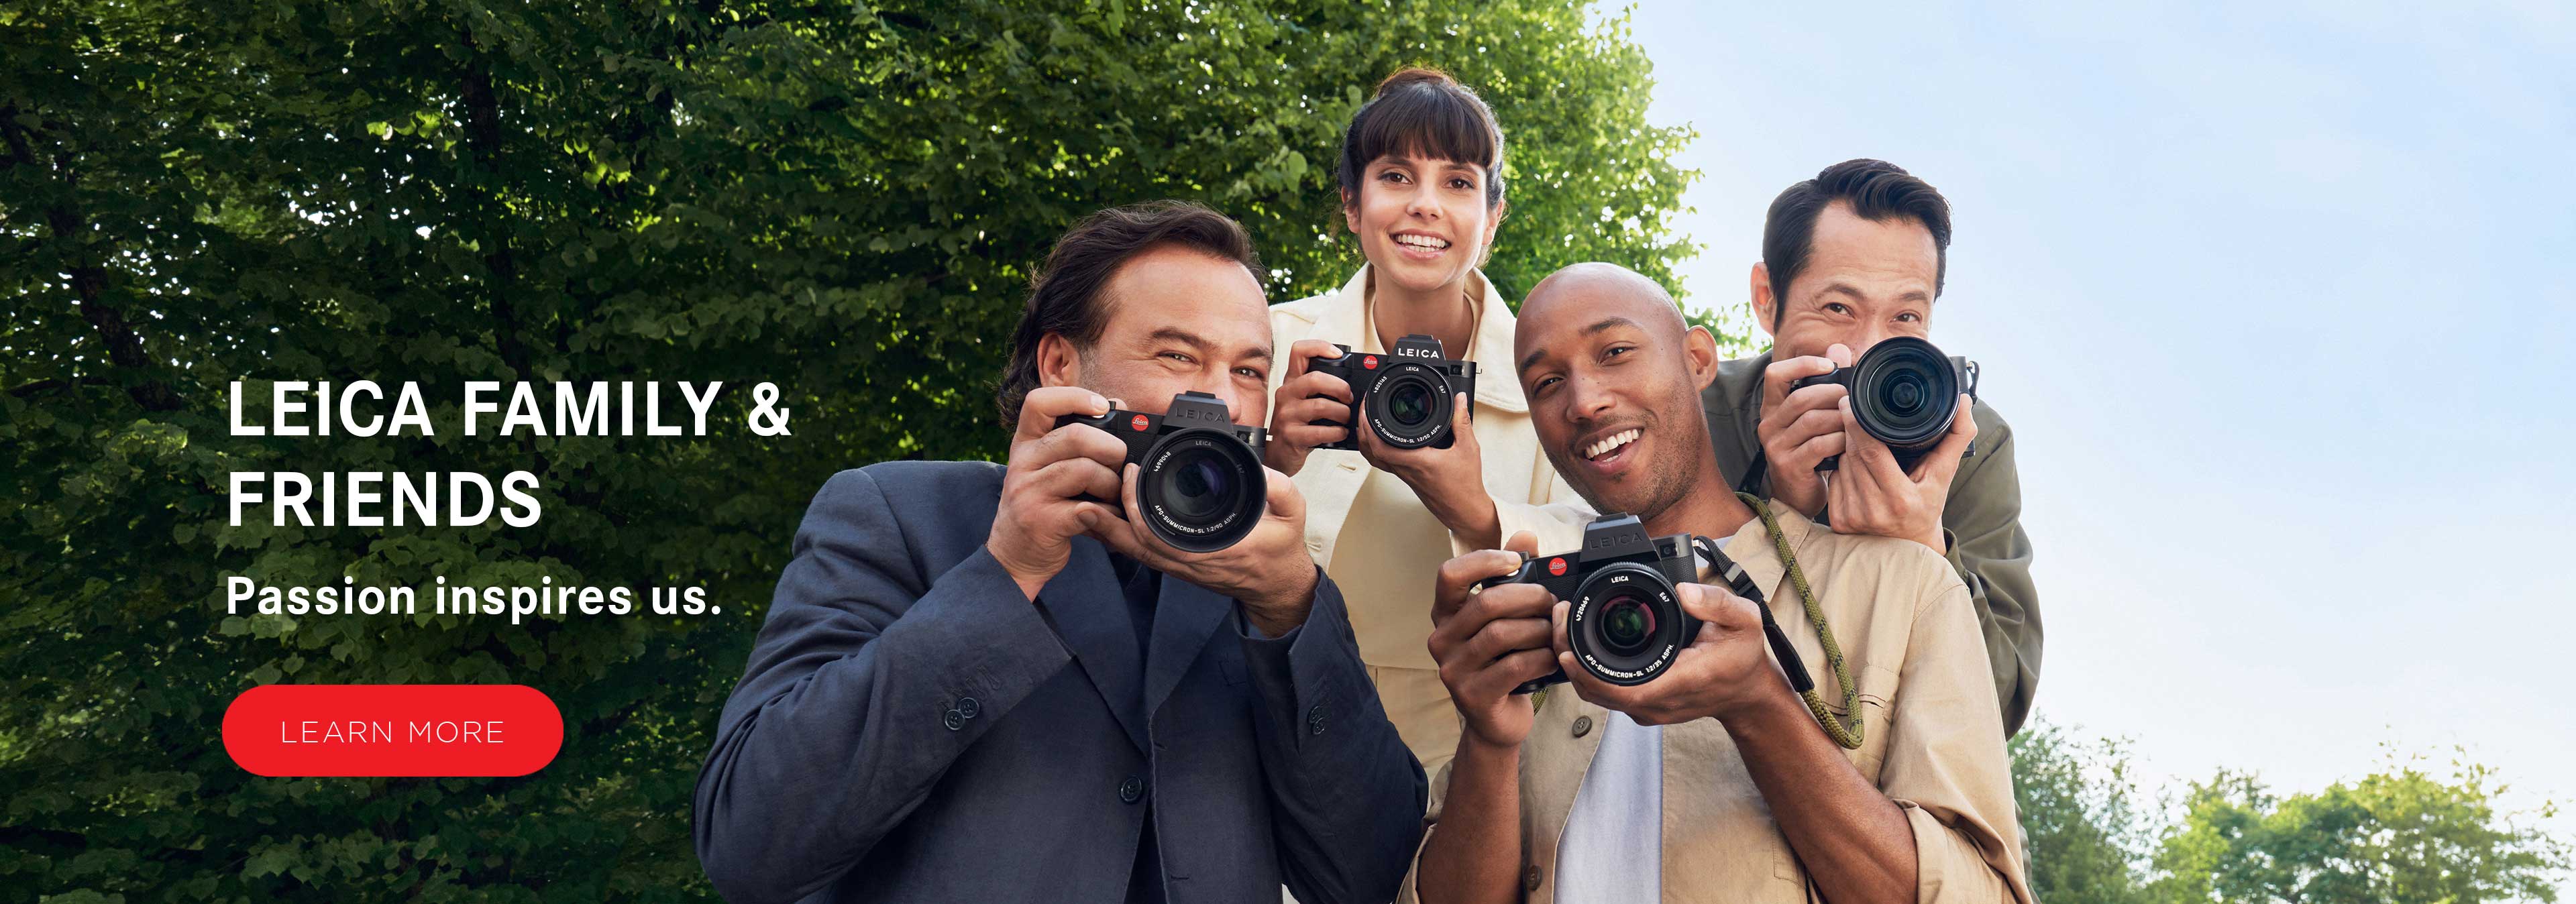 Leica Friends & Family Promo